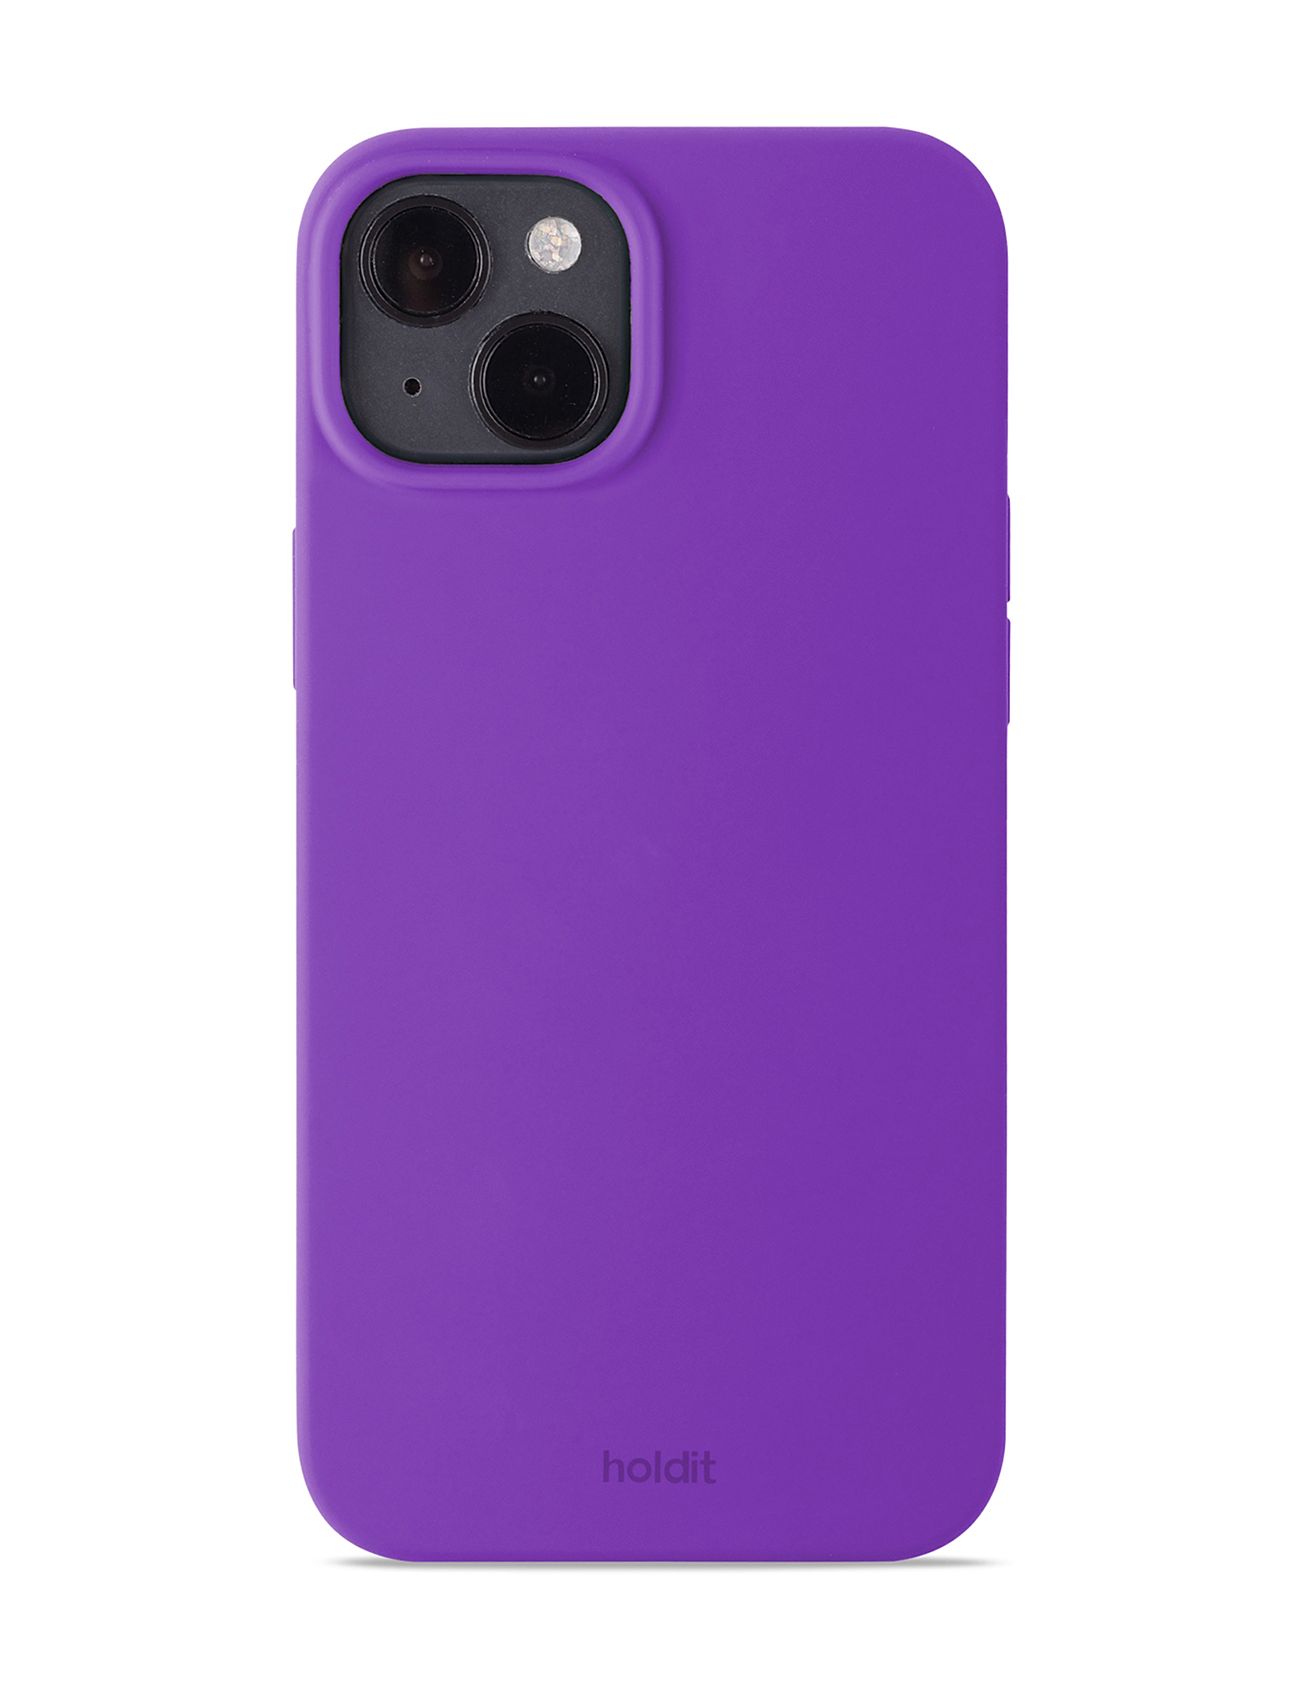 Silic Case Iph 14 Plus Mobilaccessory-covers Ph Cases Purple Holdit